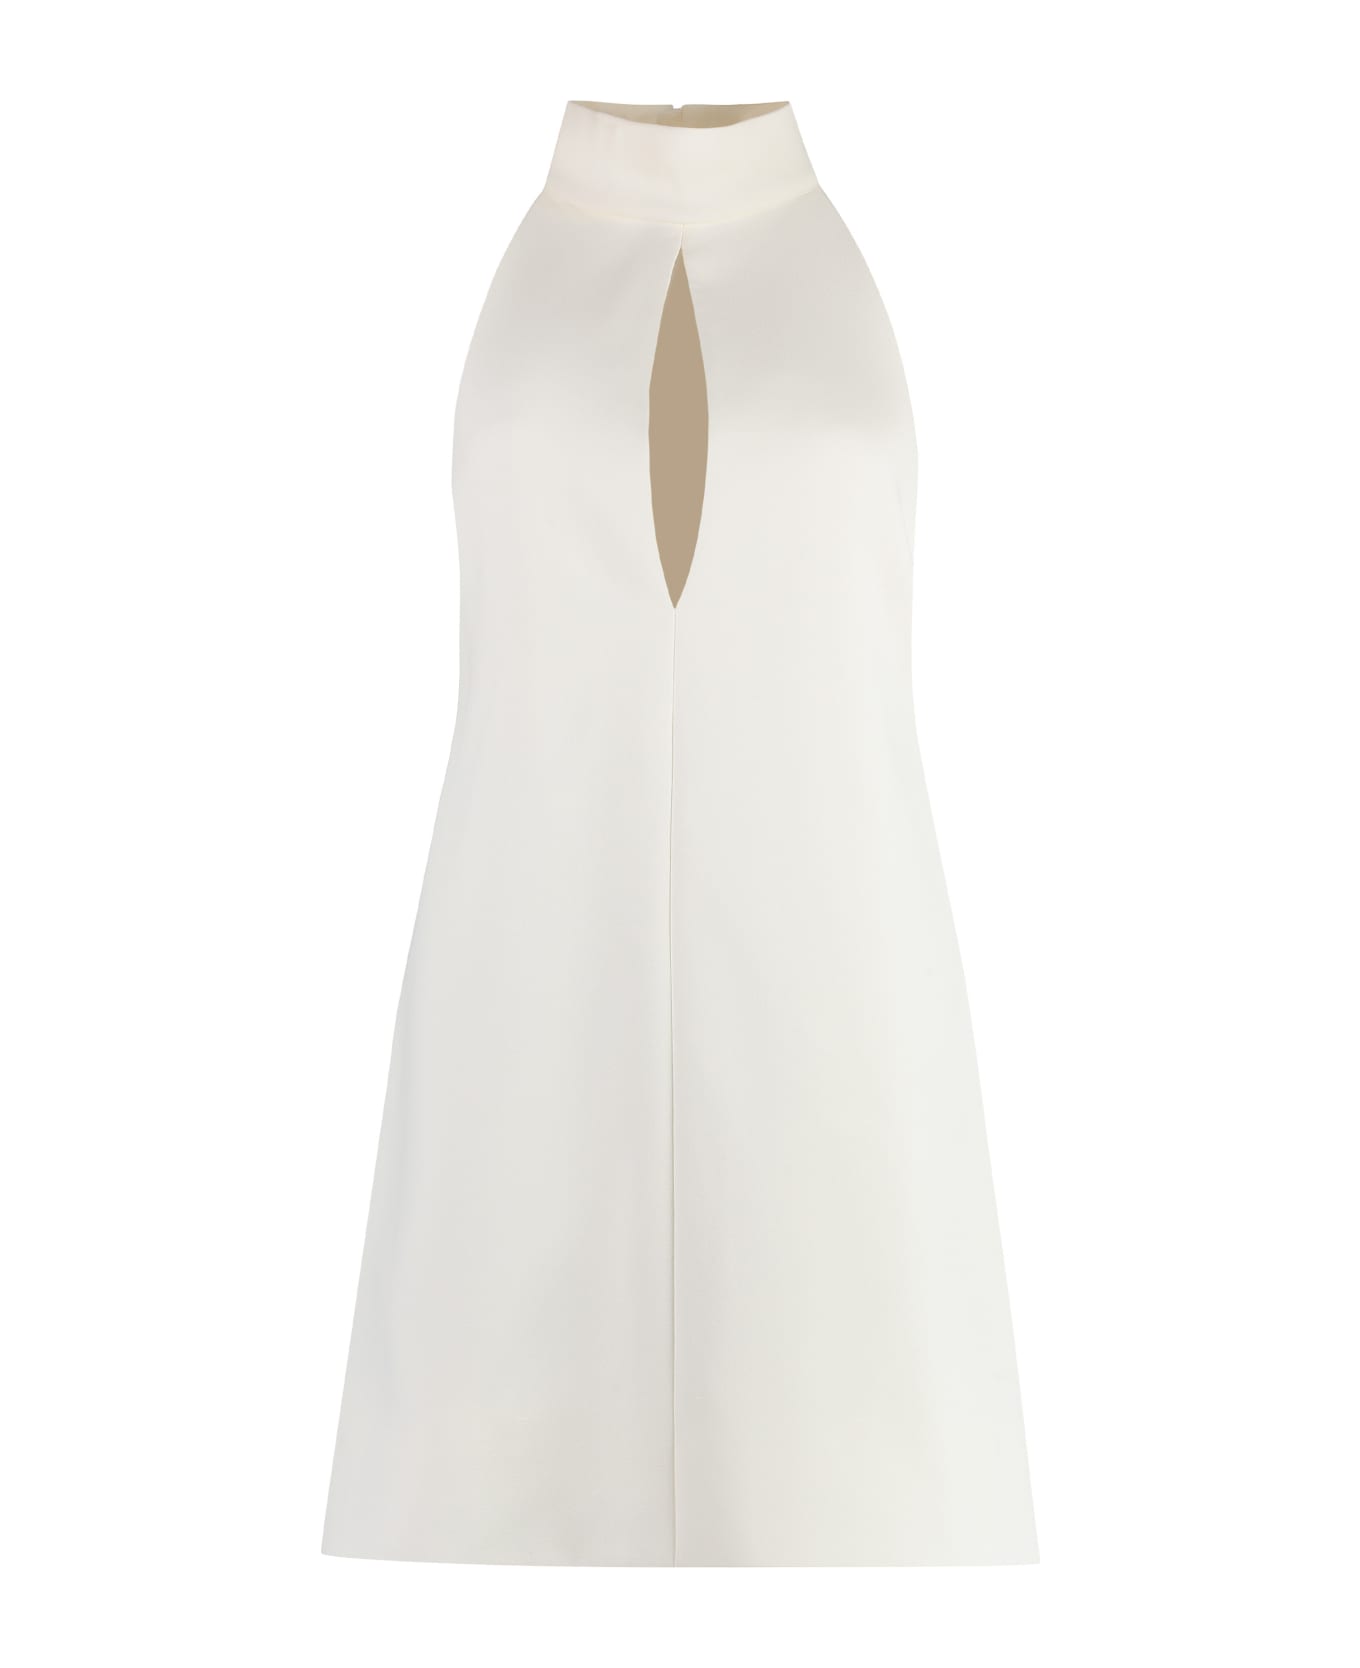 Tom Ford Crepe Dress - Ivory